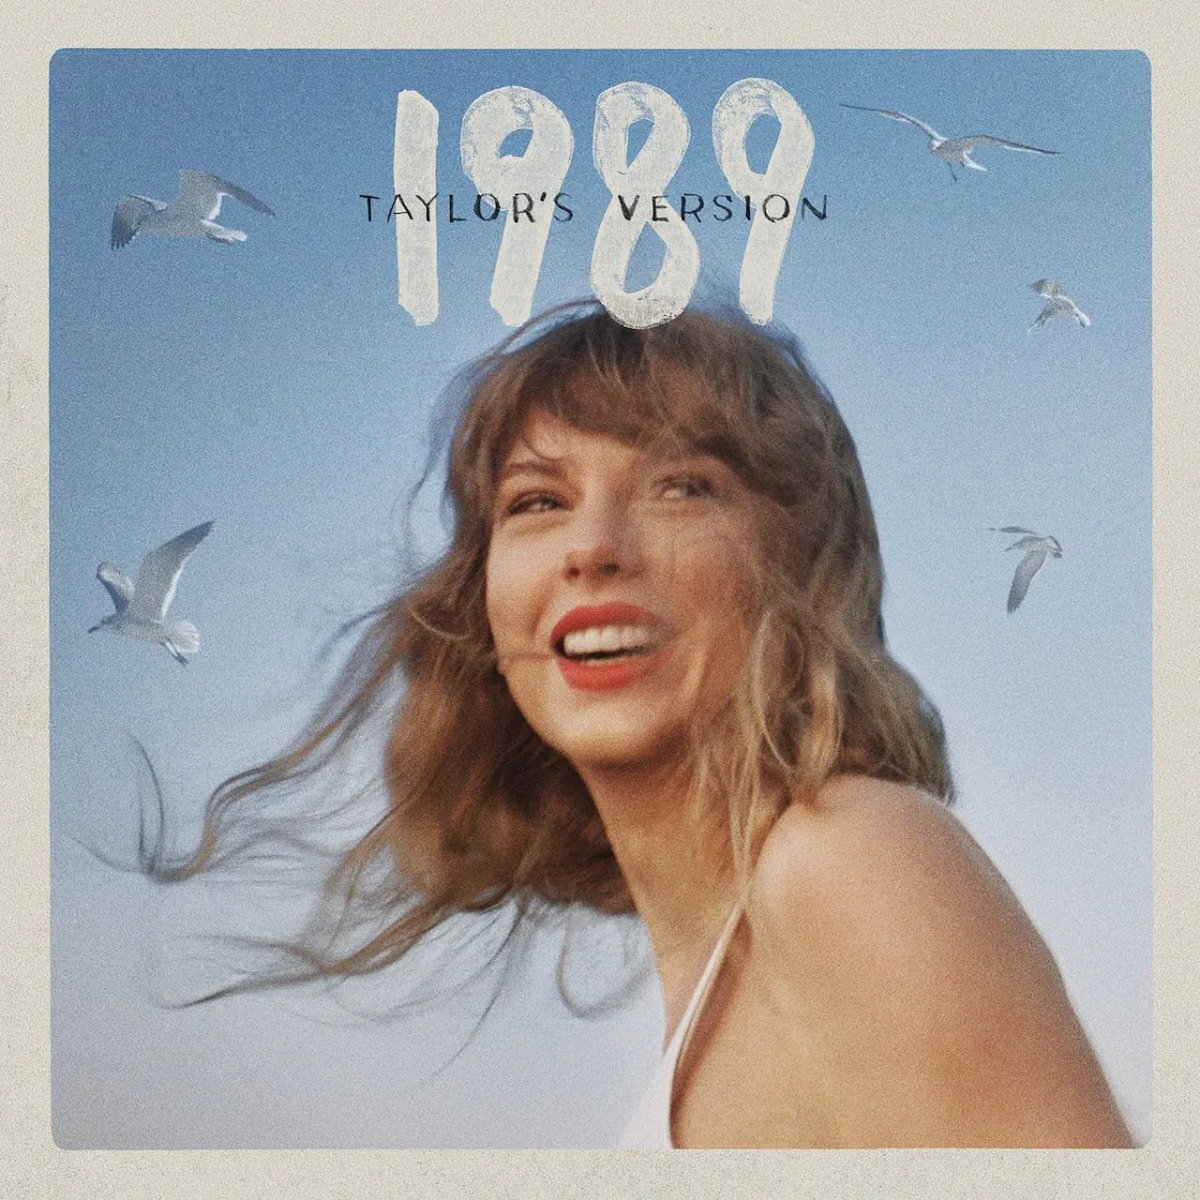 Taylor+Swift%E2%80%99s+new+album%2C+%E2%80%9C1989+%28Taylor%E2%80%99s+Version%29+looks+back+on+love+and+past+memories.+